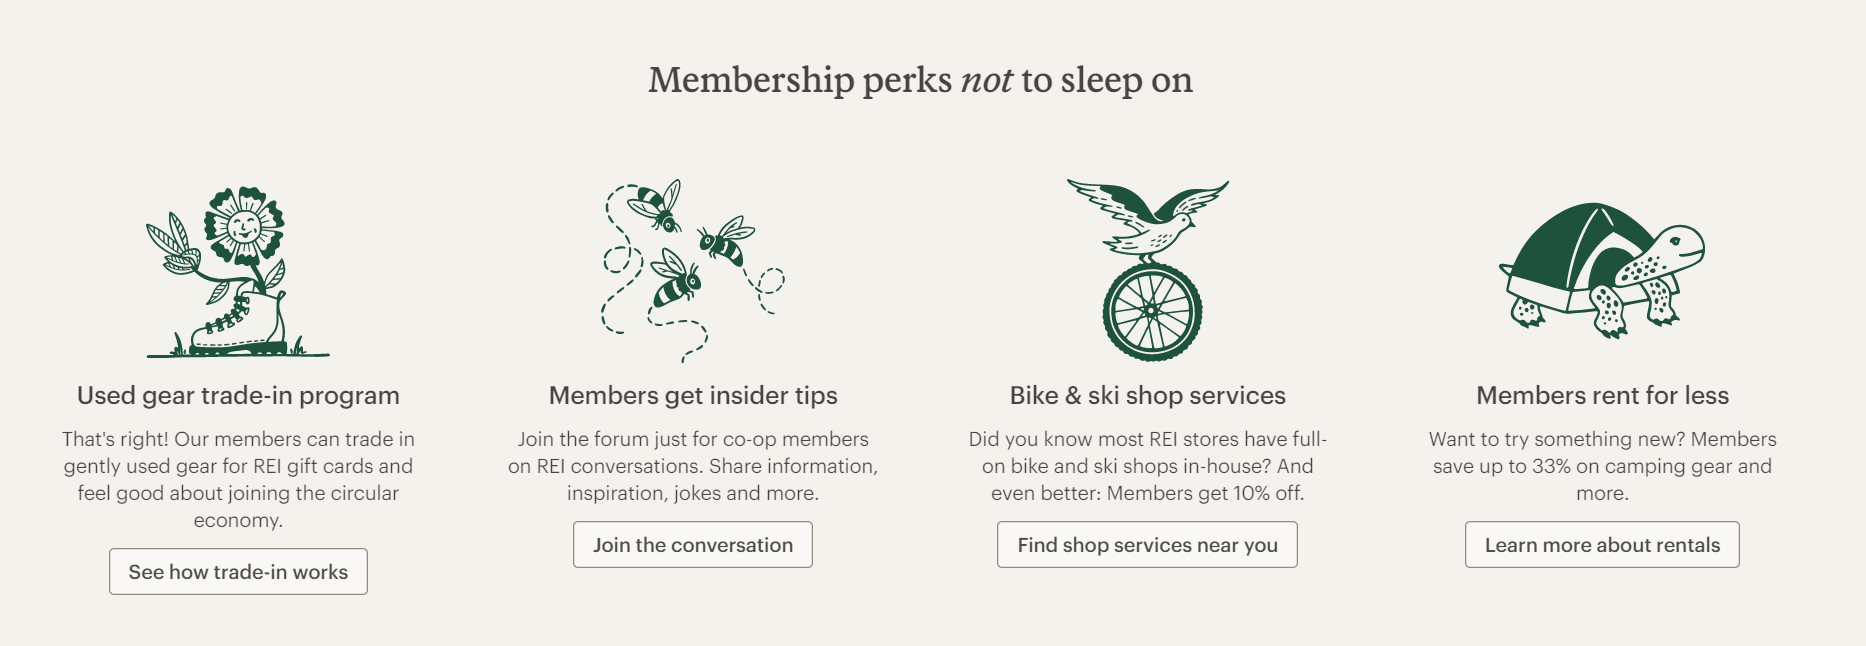 Membership perks explained for REI Co-op loyalty program members